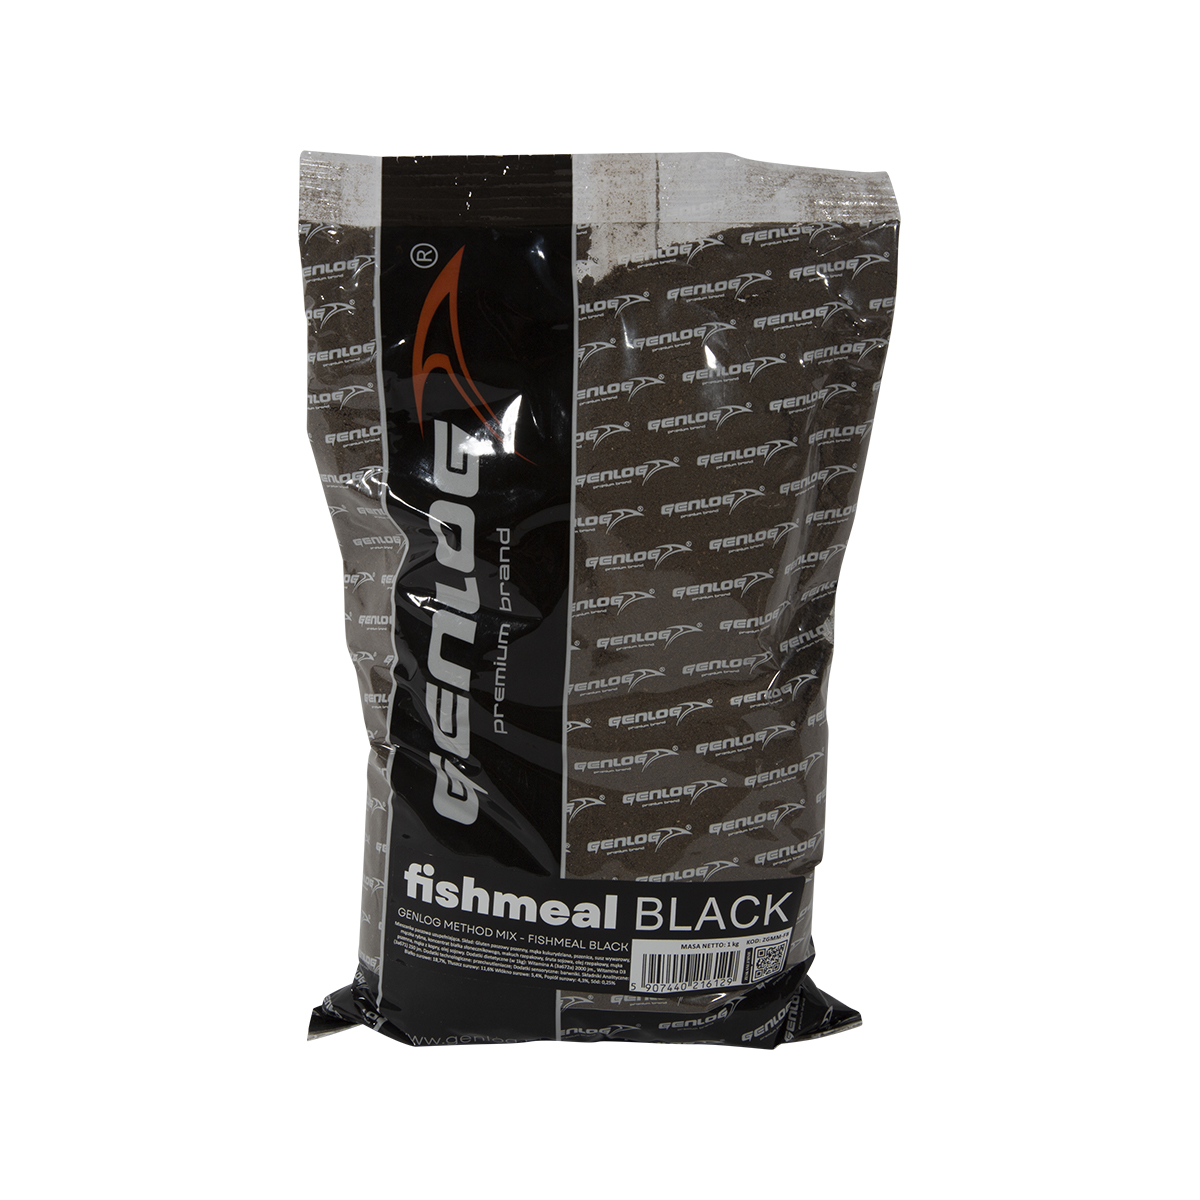 Genlog Method Mix Fishmeal Black (1kg)